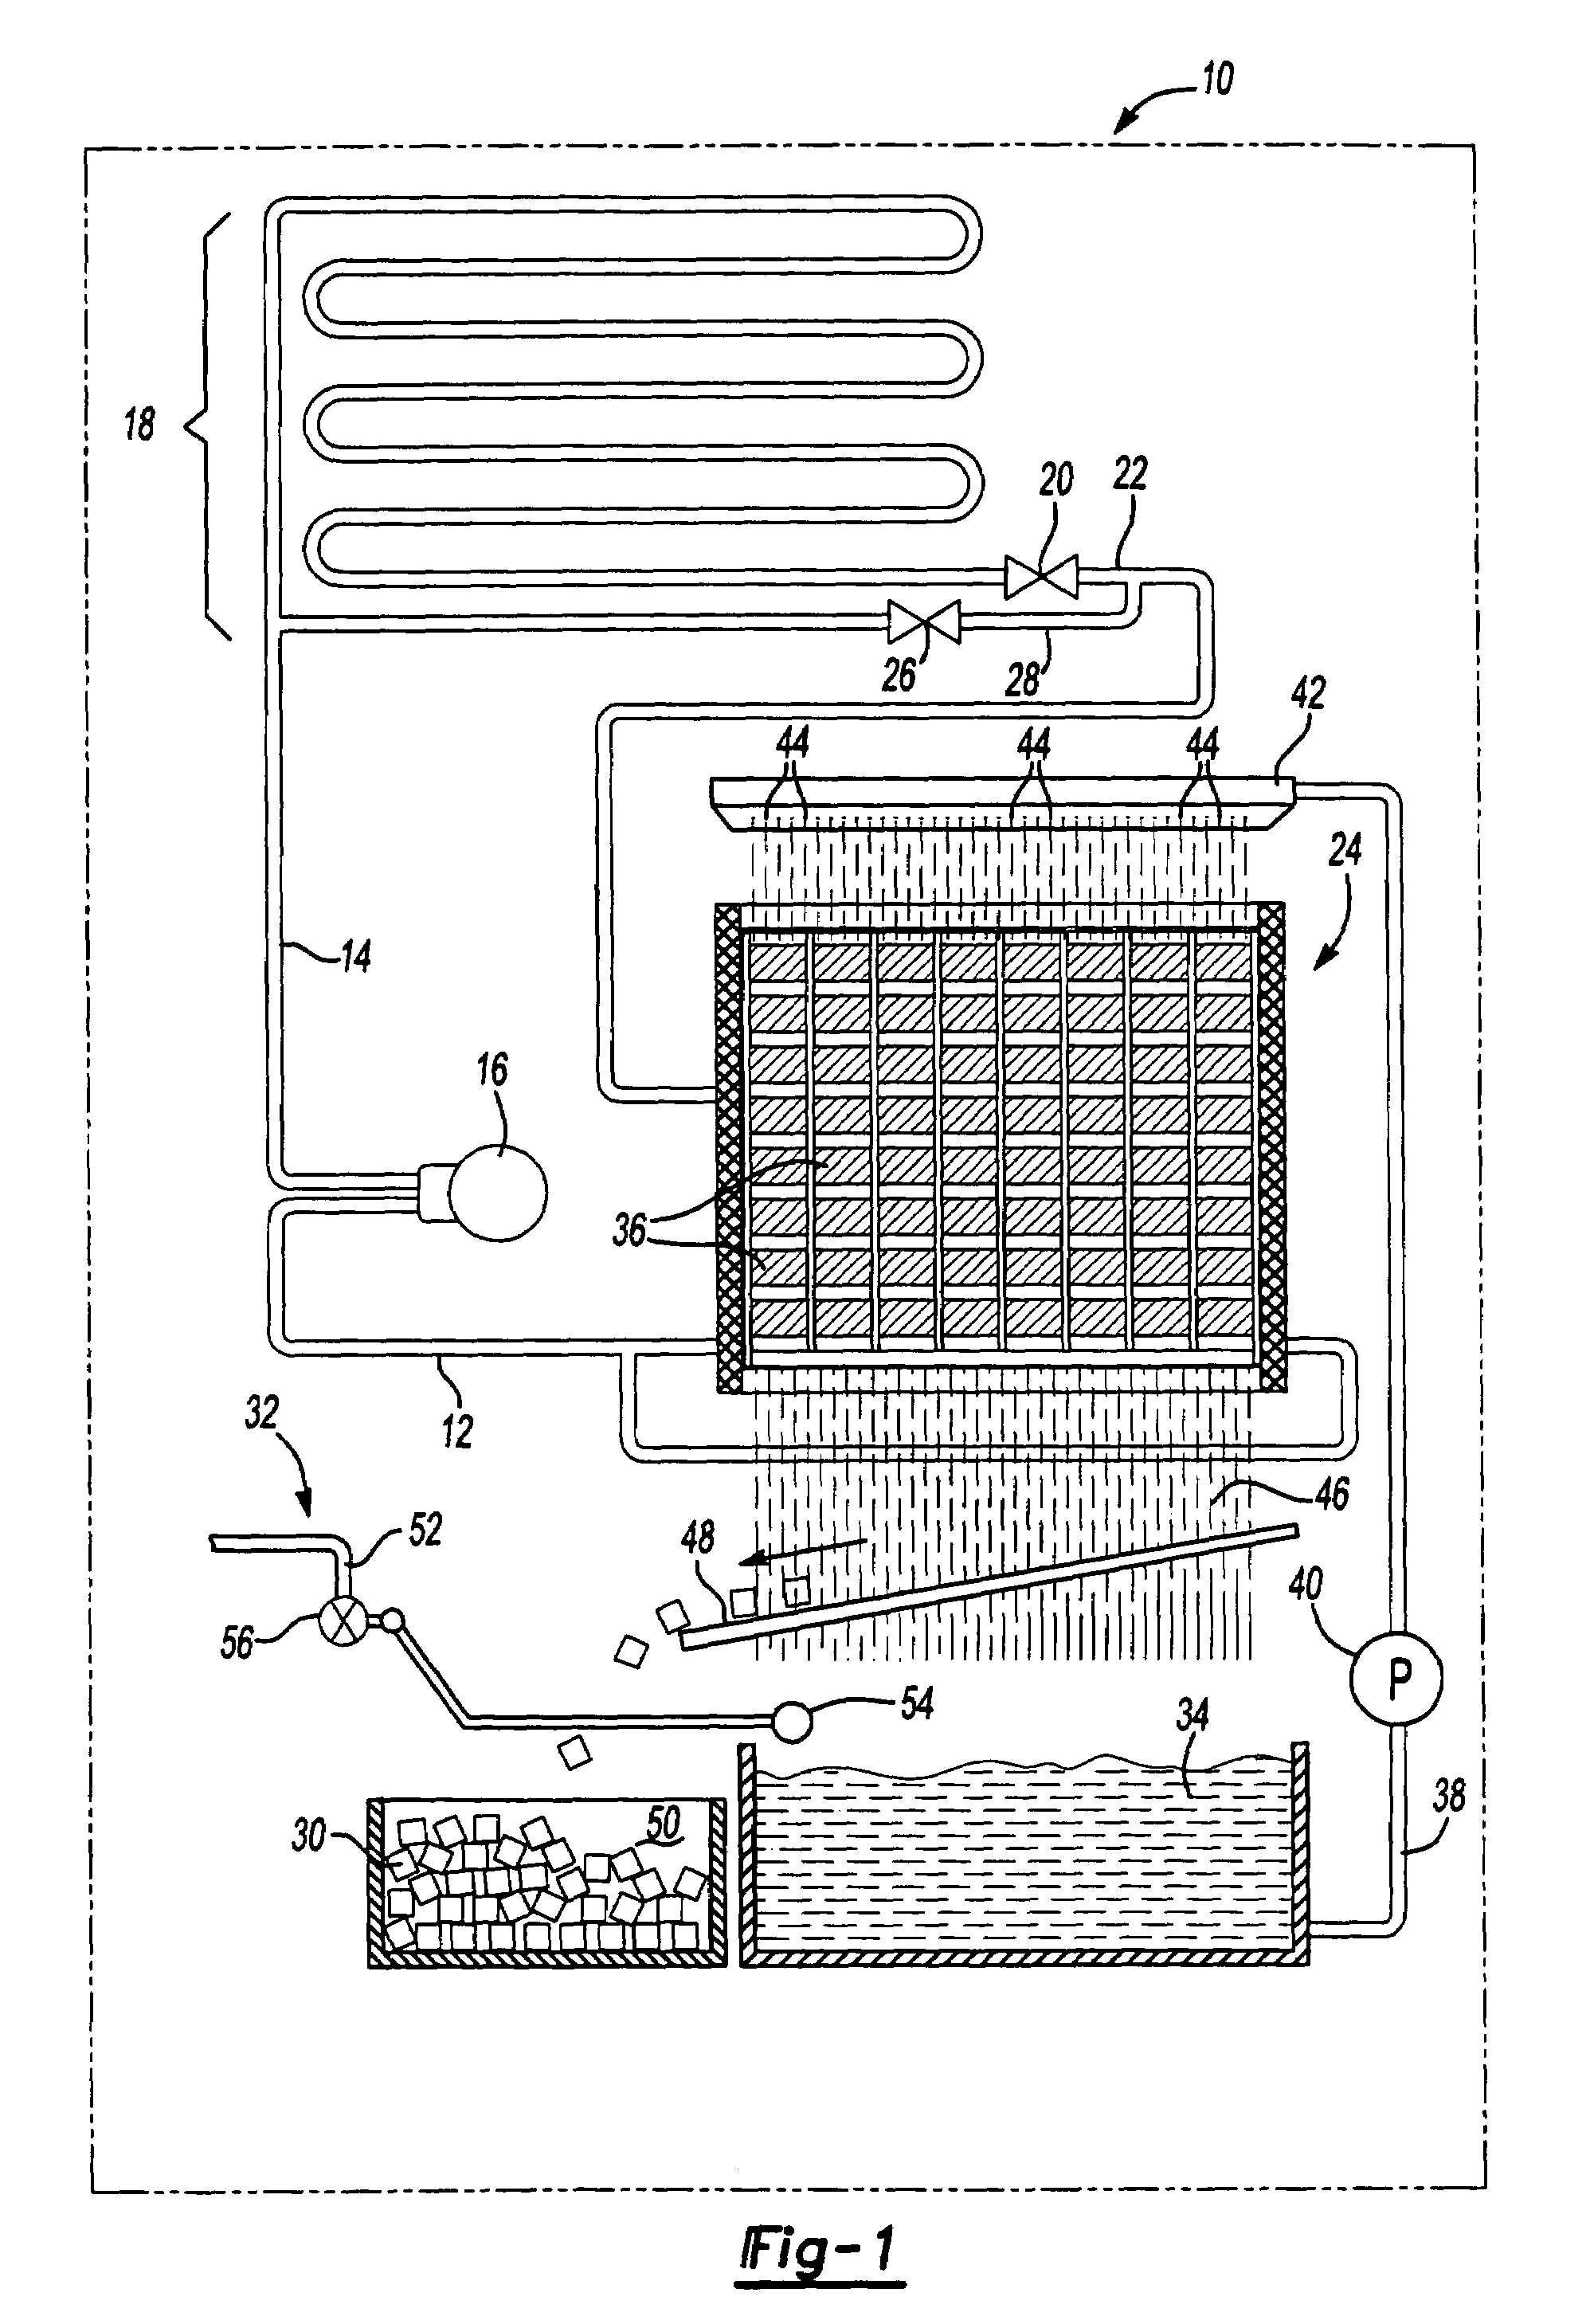 Micro-channel tubing evaporator